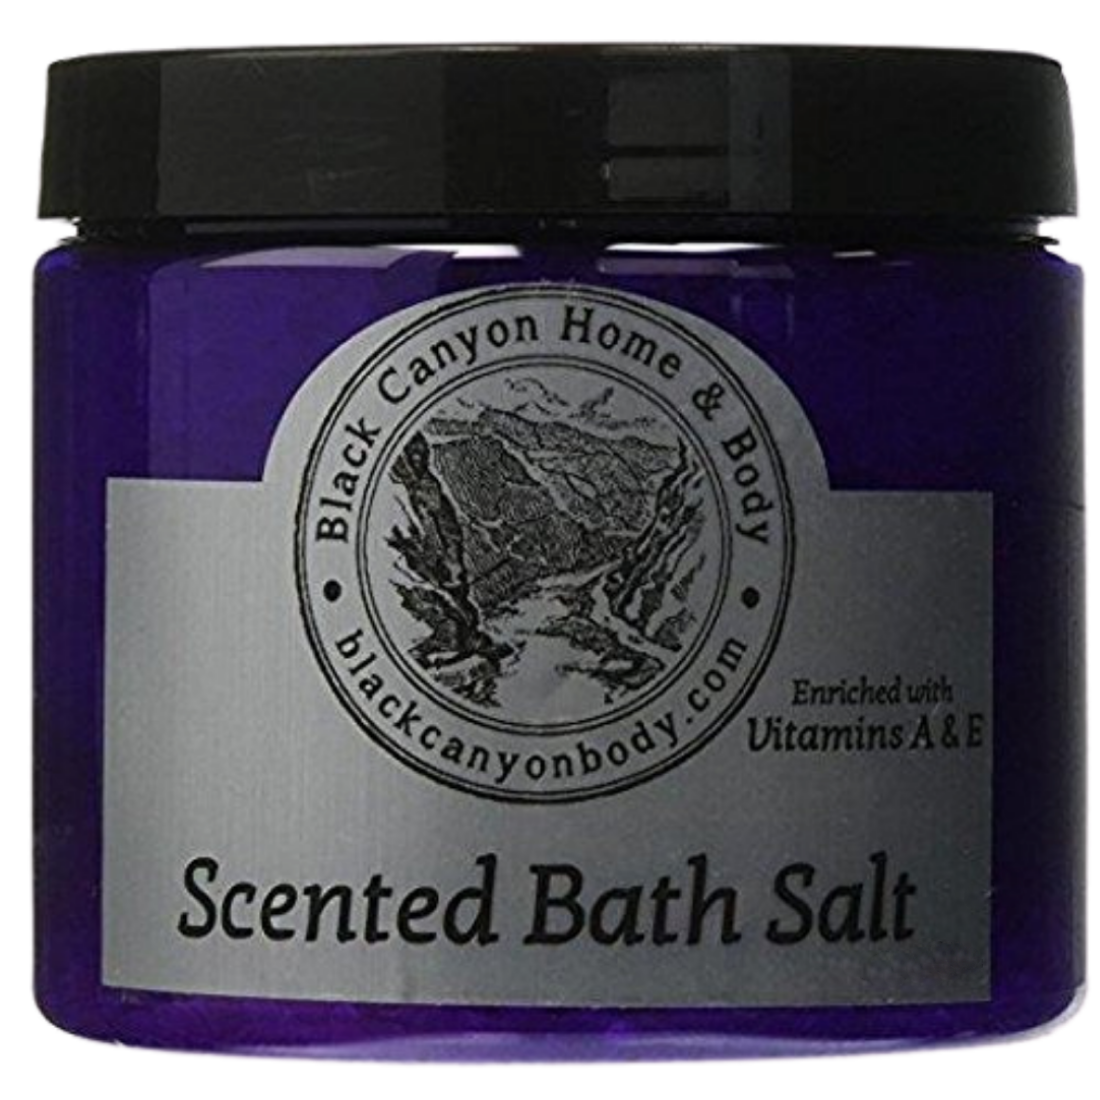 Black Canyon Apple Pecan Fritter Scented Epsom Salt Bath Soak